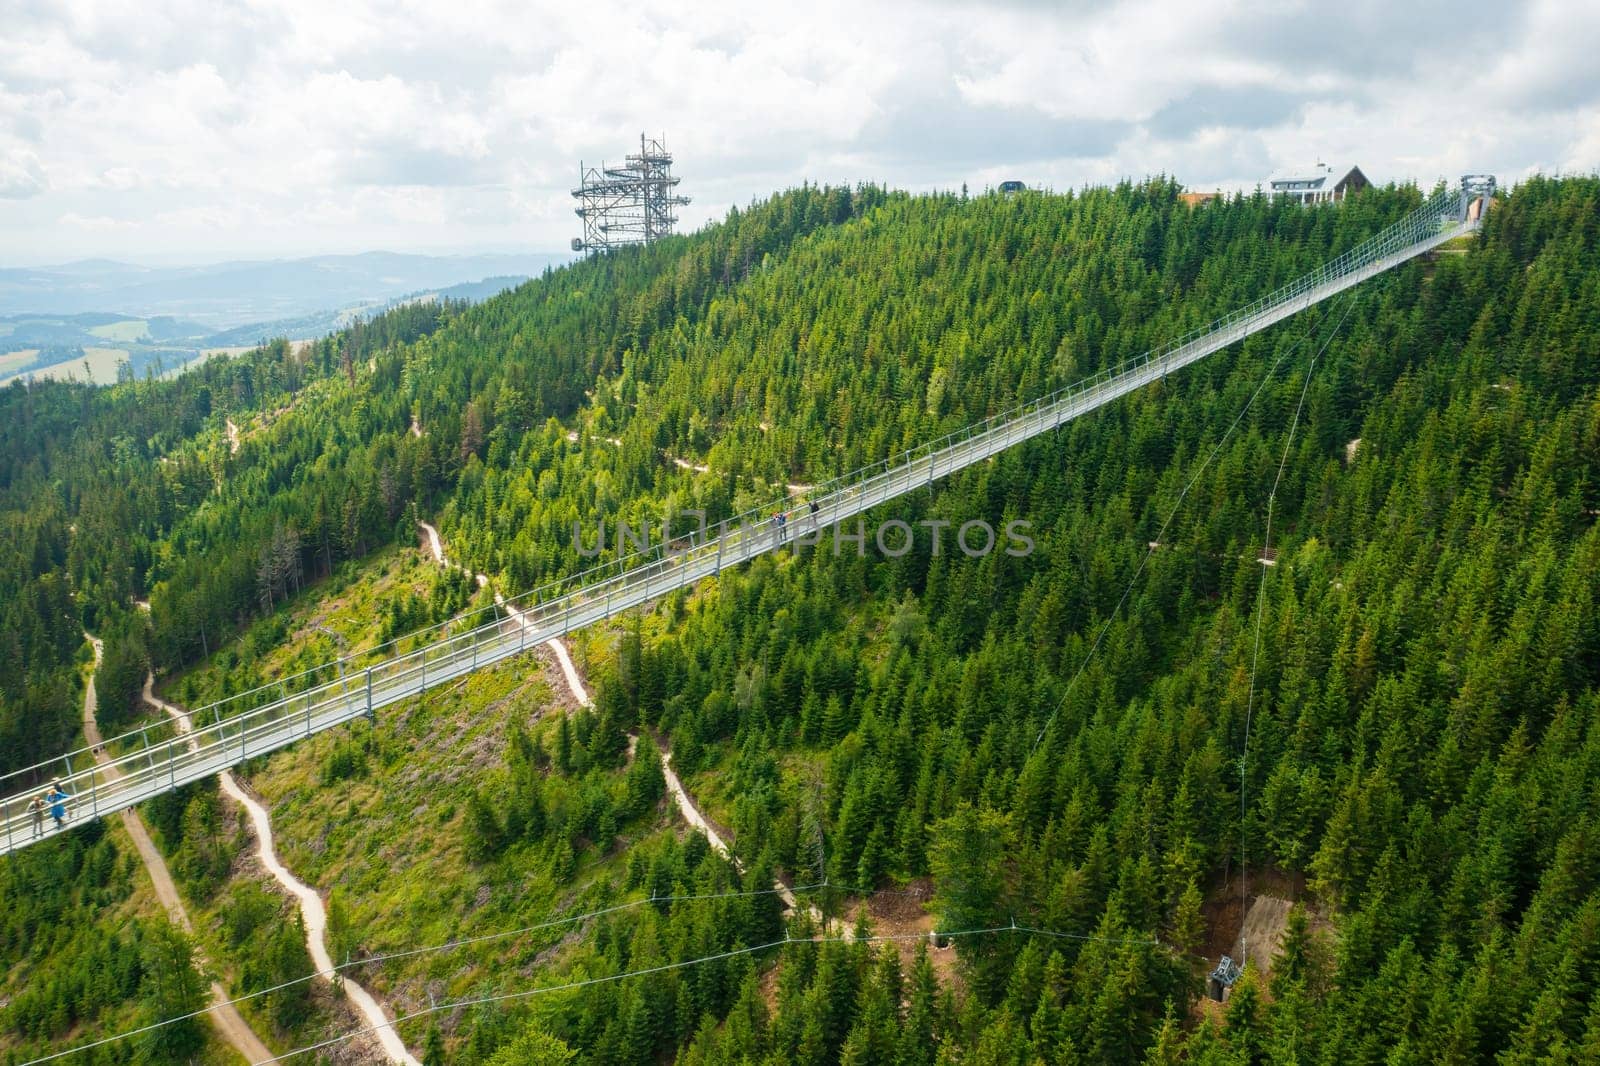 The worlds longest 721 meter suspension footbridge Sky bridge and observation tower the Sky walk by vladimka